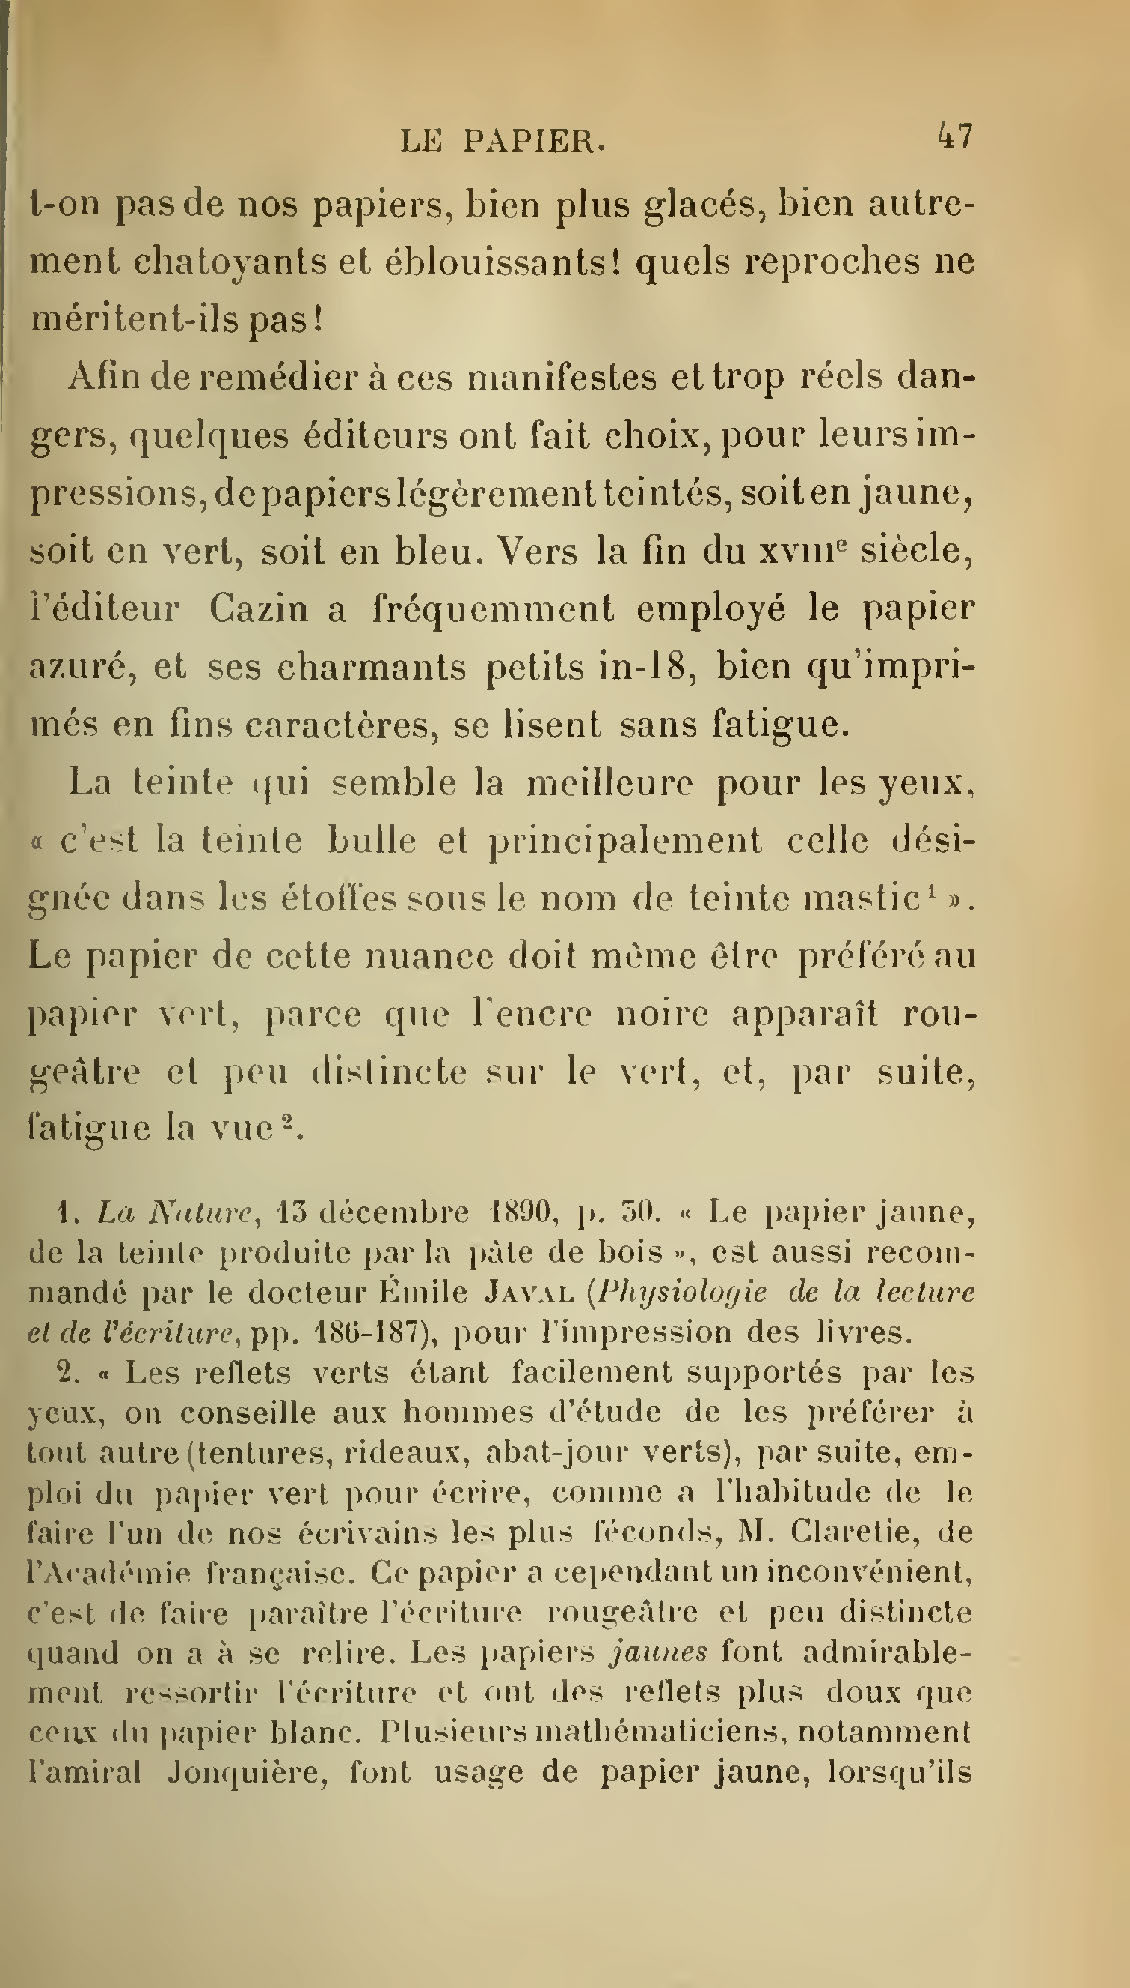 Albert Cim, Le Livre, t. III, p. 47.